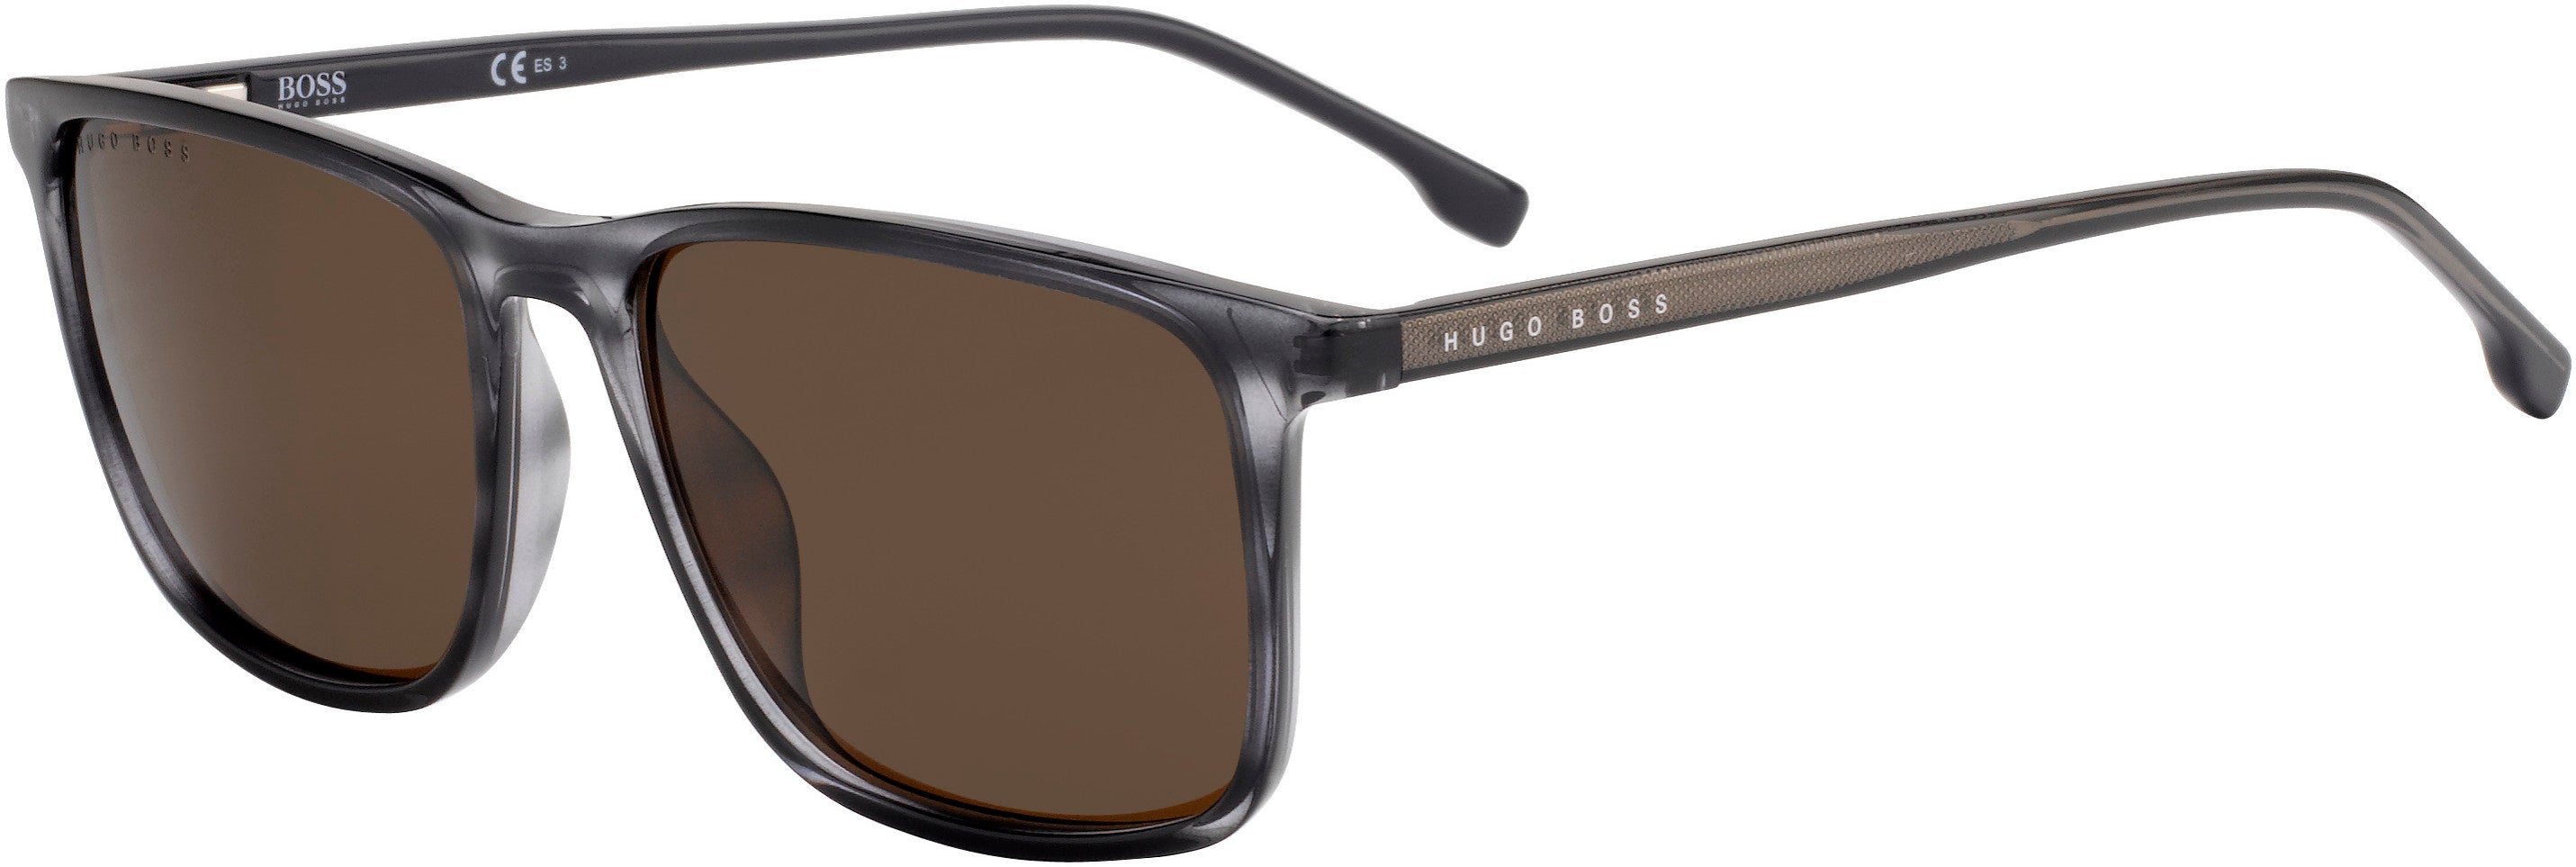 Boss (hub) Boss 1046/S Rectangular Sunglasses 02W8-02W8  Gray Horn (70 Brown)